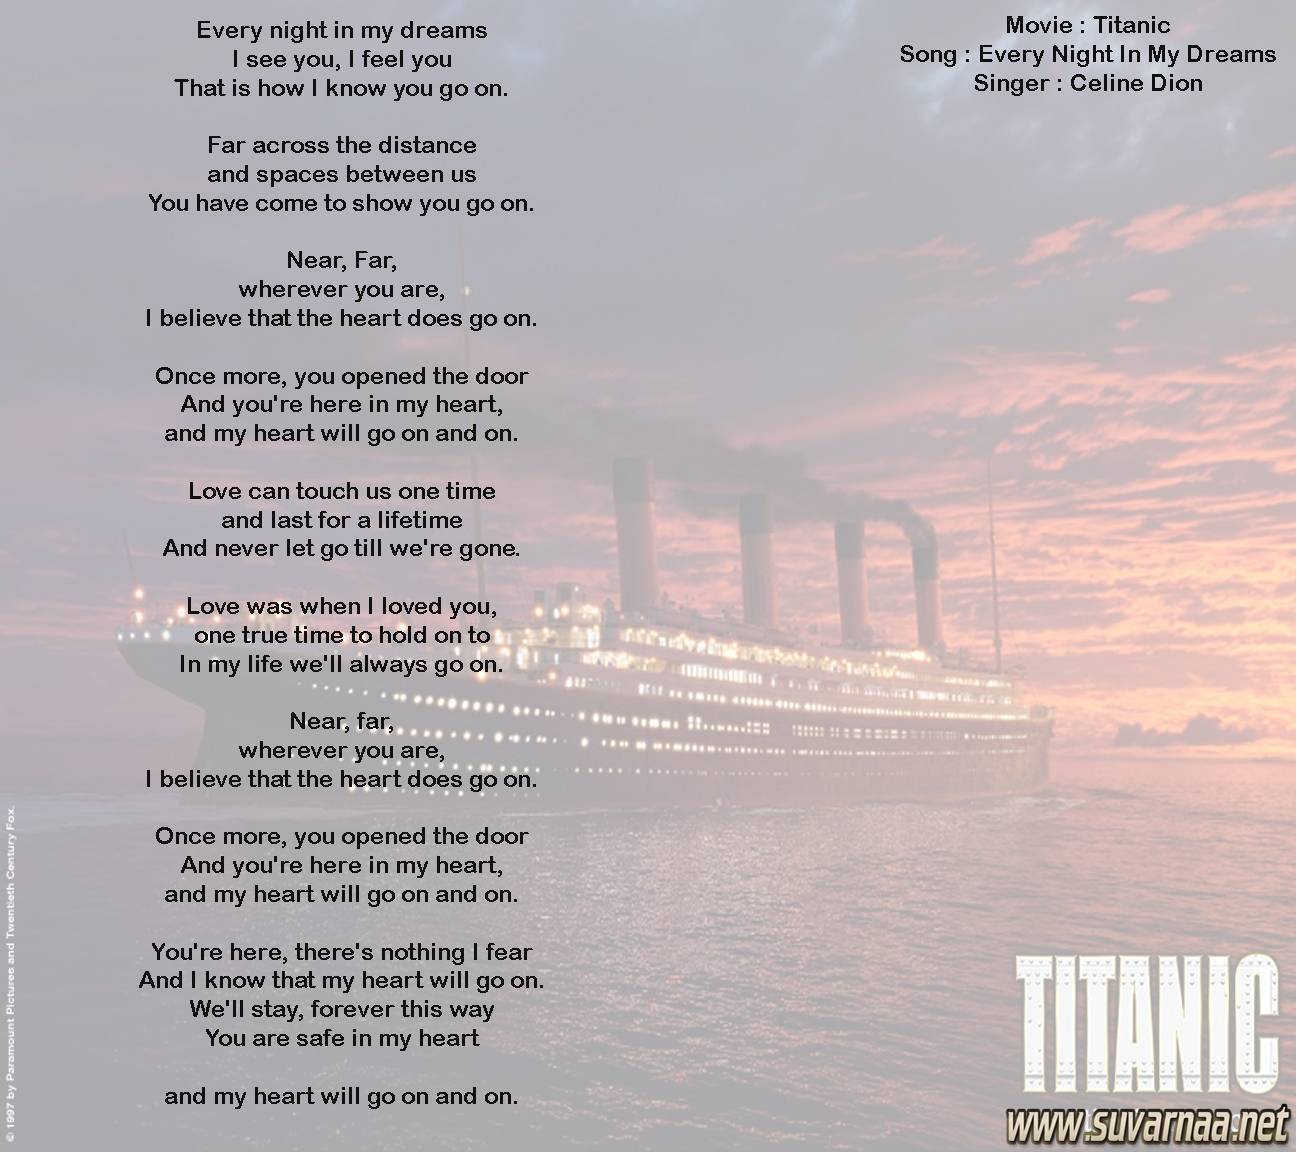 Feel the Love Tonight: Titanic Lyrics for Steamy Nights